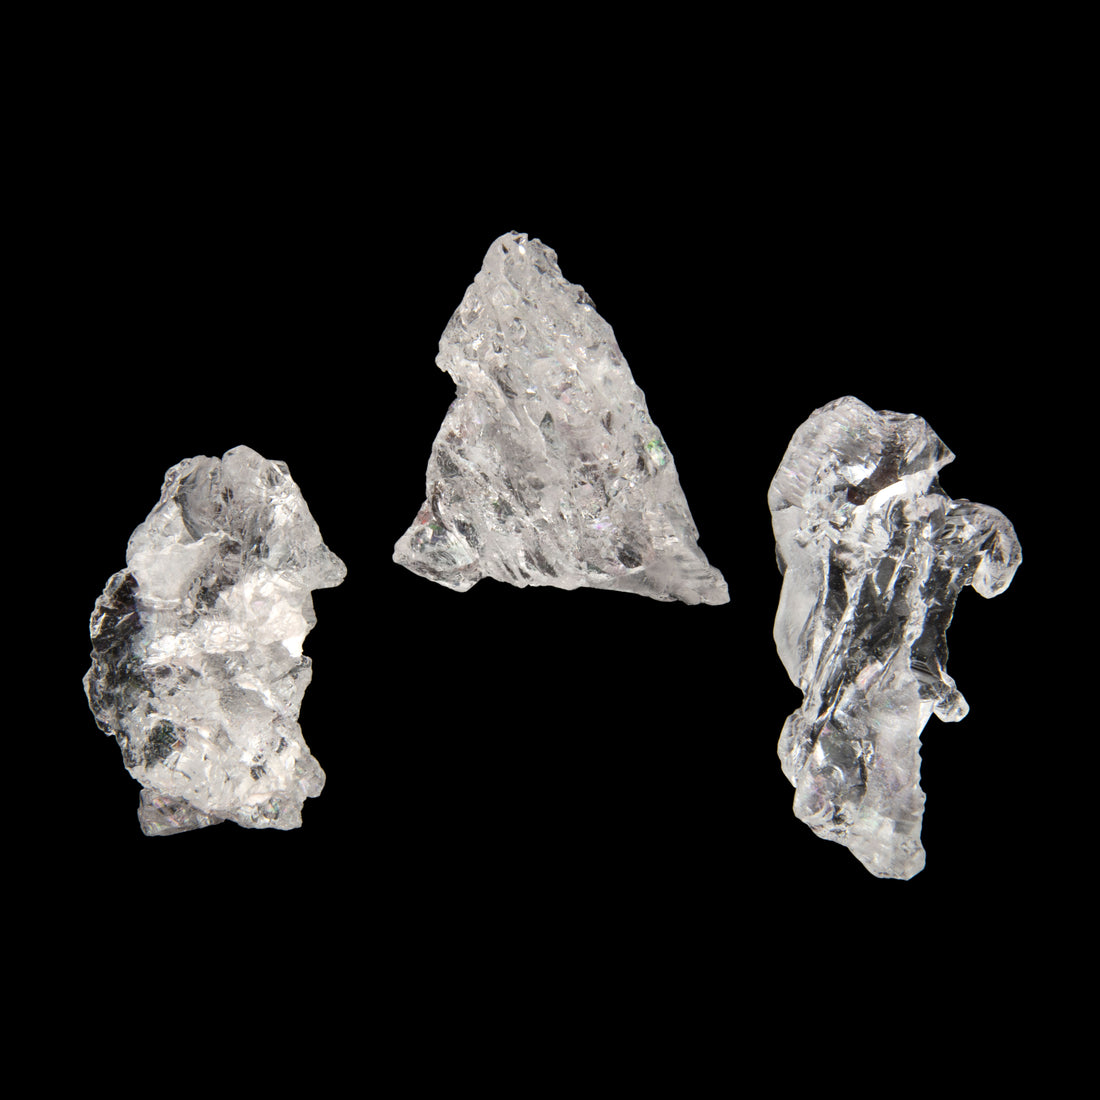 Pollucite - Etched, Pieces